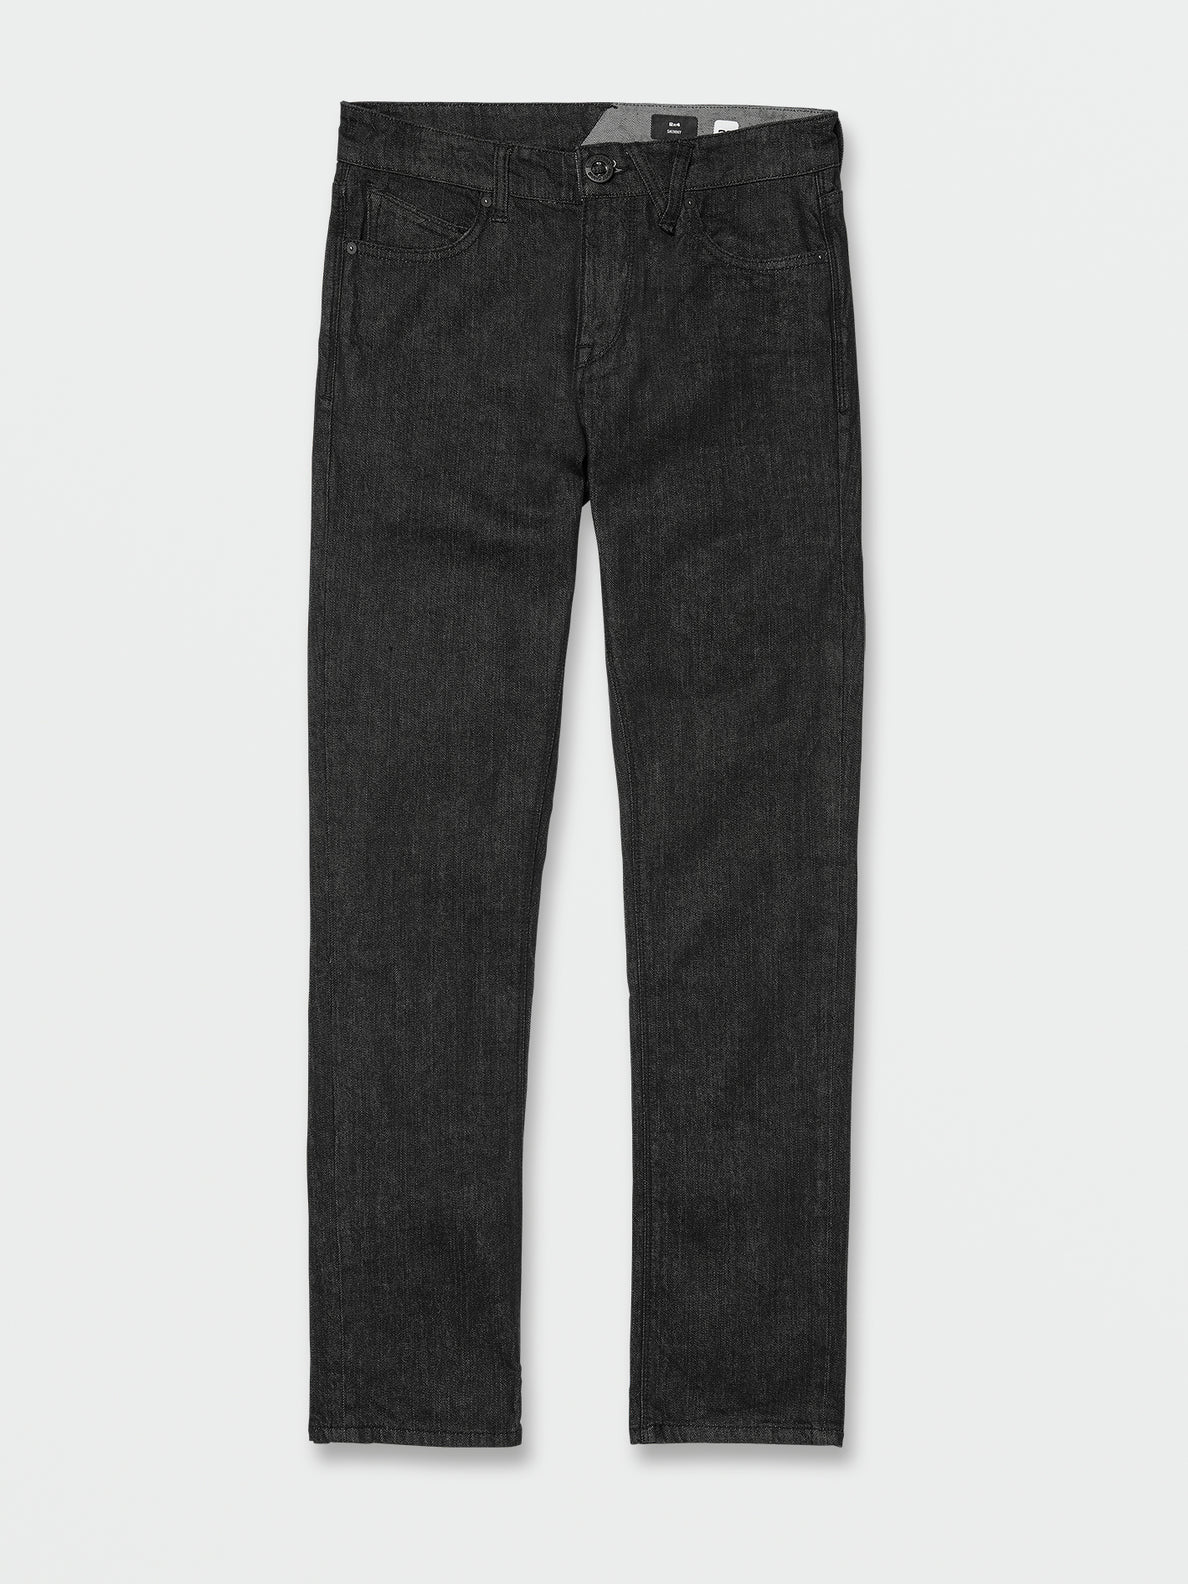 V 2X4 Stretch Jeans - Rinsed Black